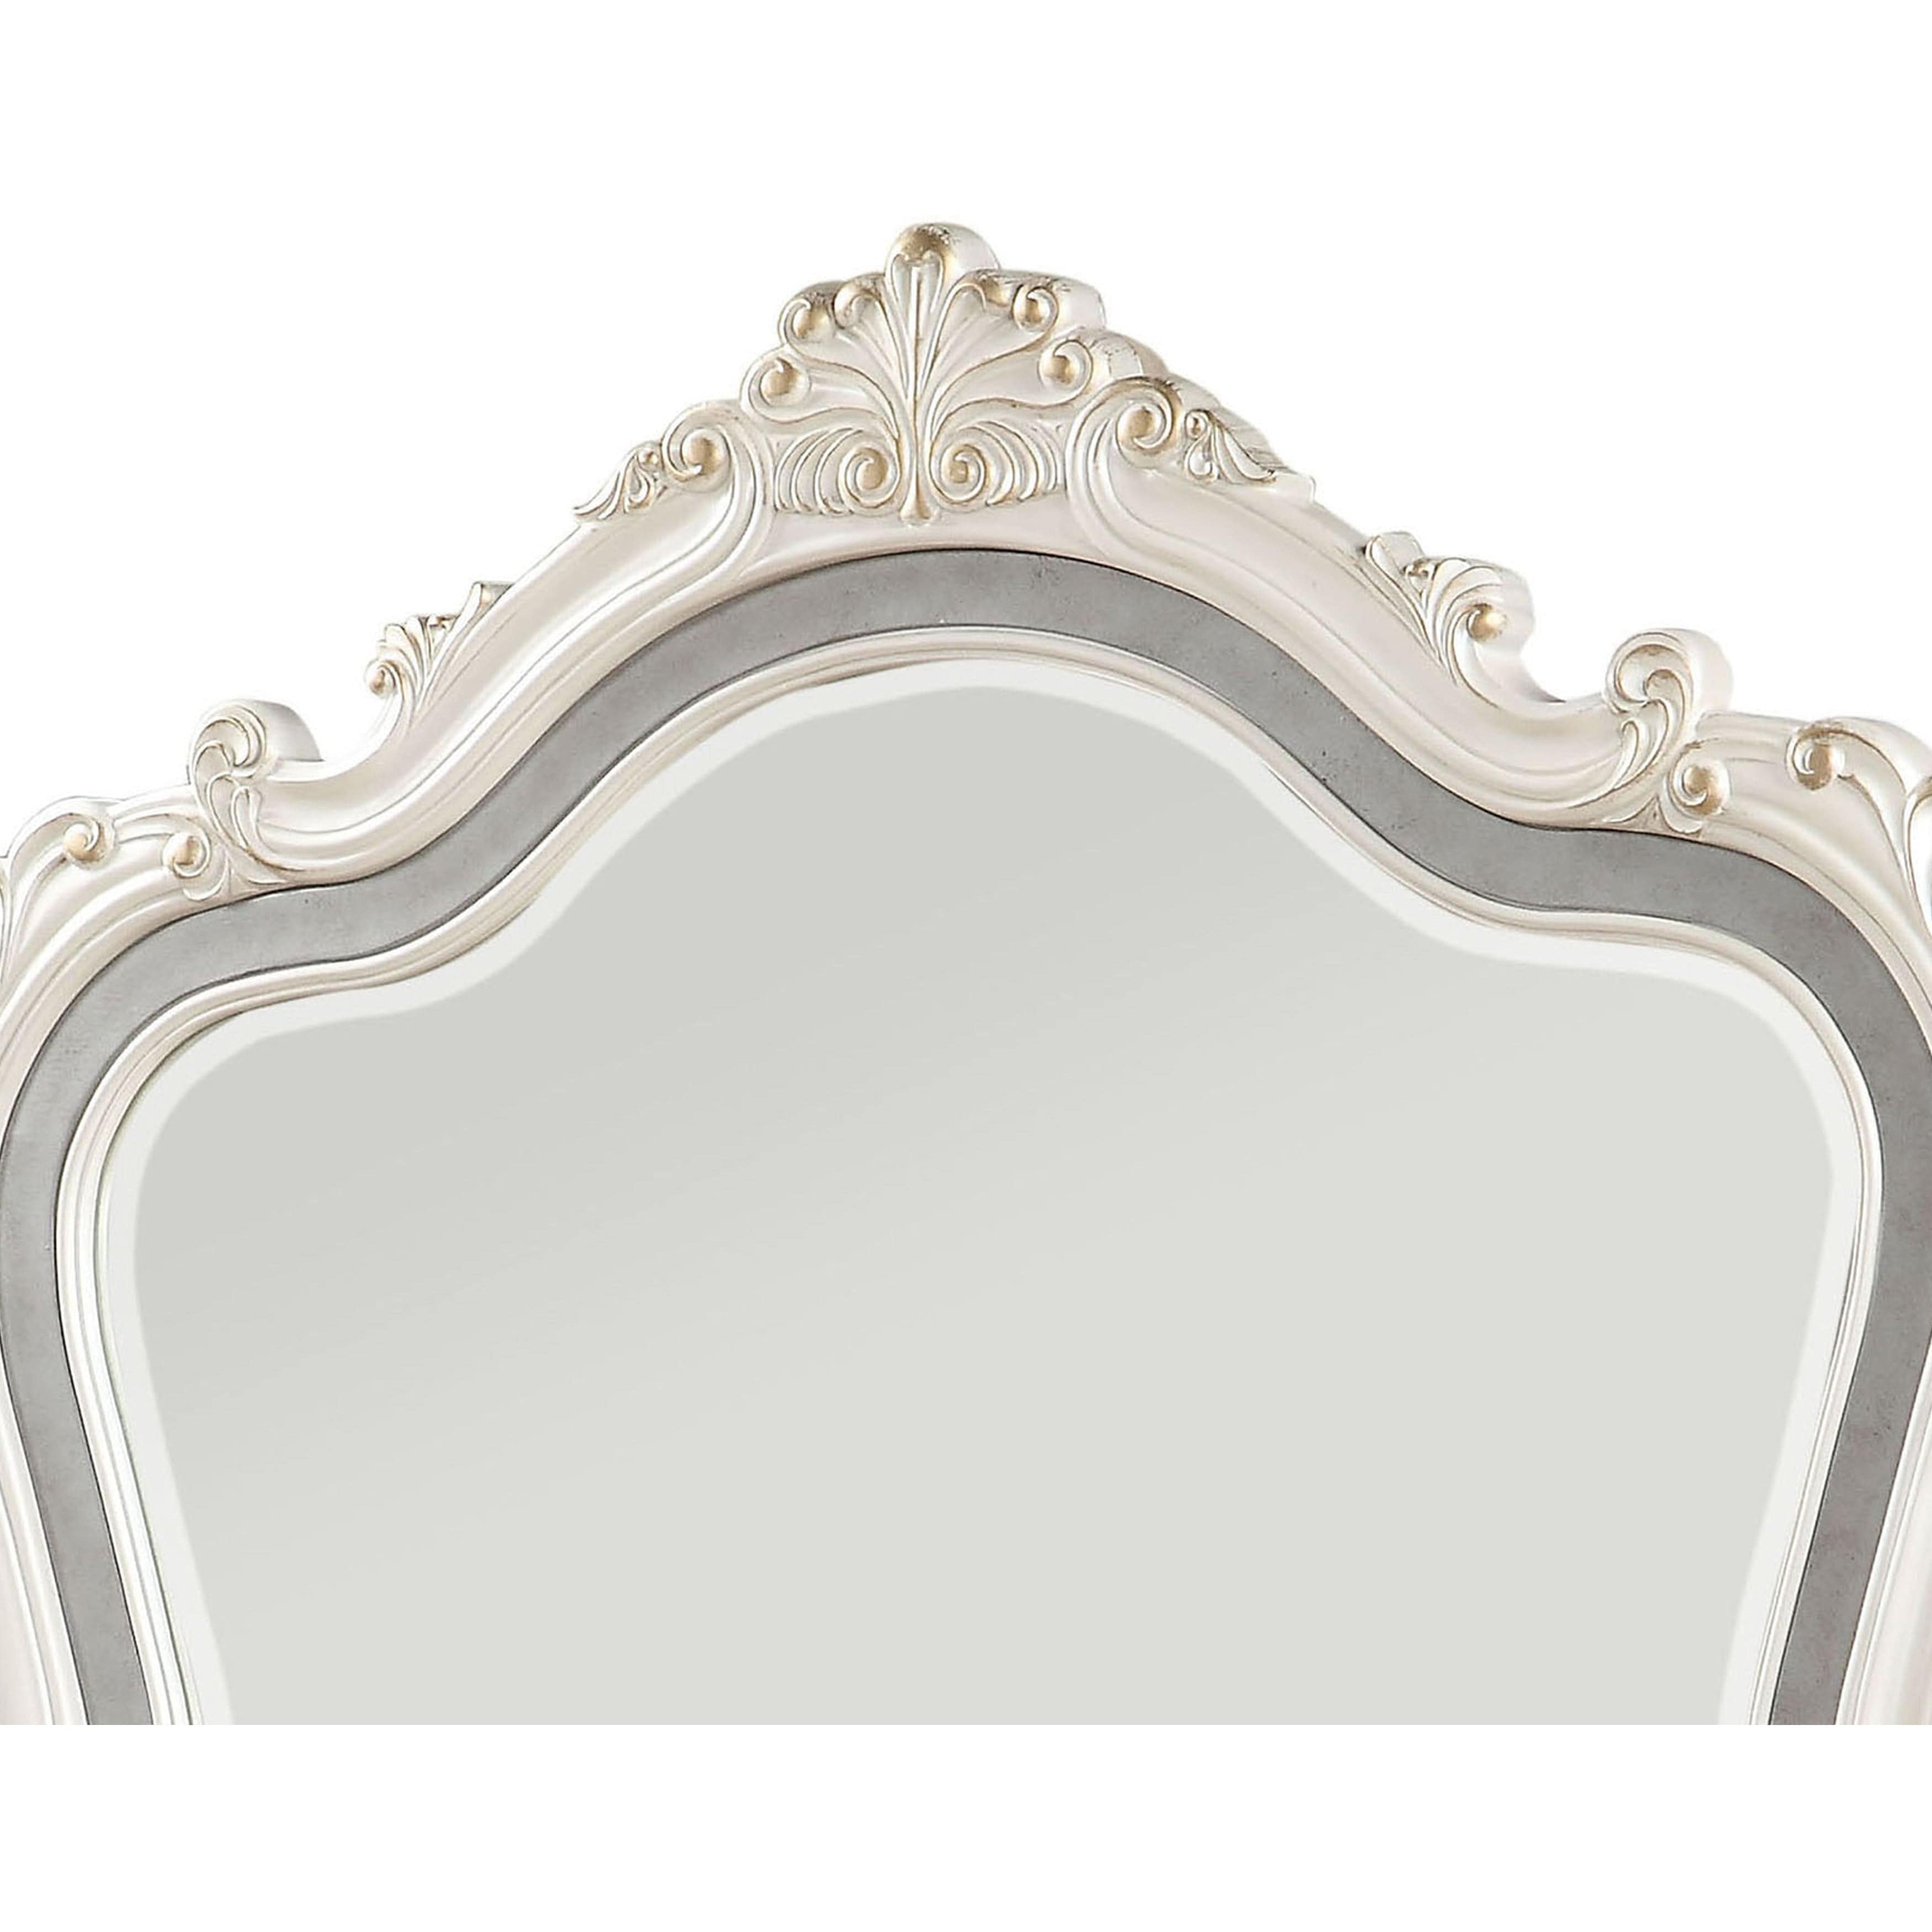 Benzara Benzara BM205579 45" Traditional Mirror with Wooden Scrollwork Crown Traditional Mirrors BM205579